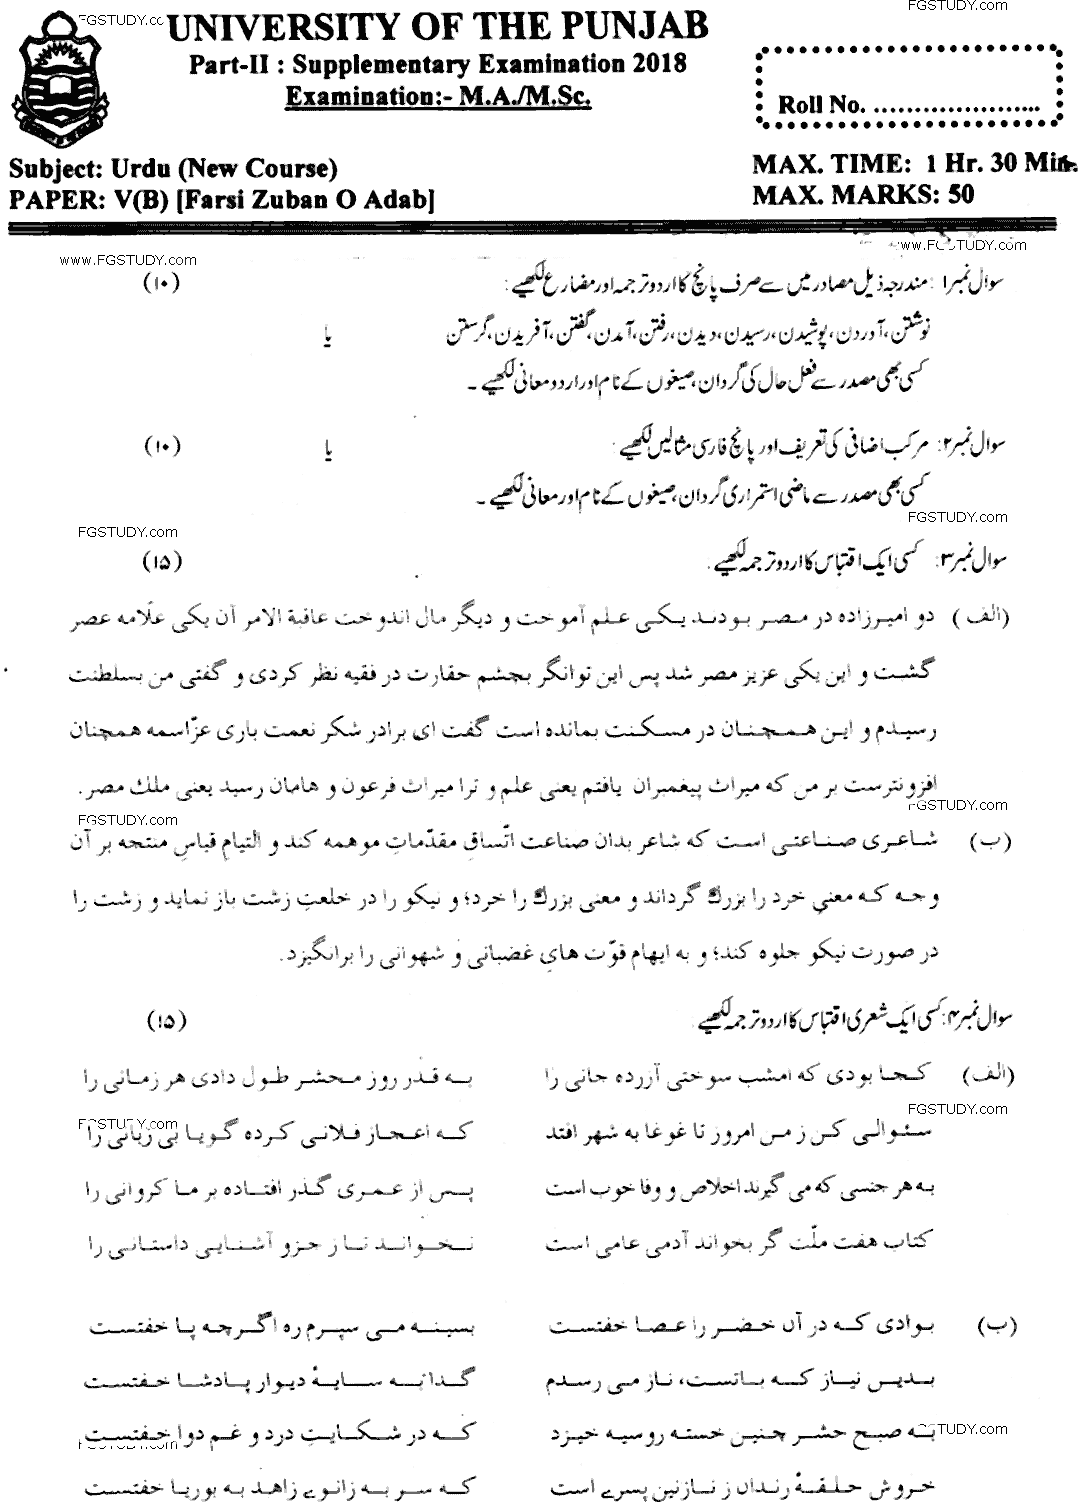 MA Part 2 Urdu Farsi Zuban O Adab Past Paper 2018 Punjab University